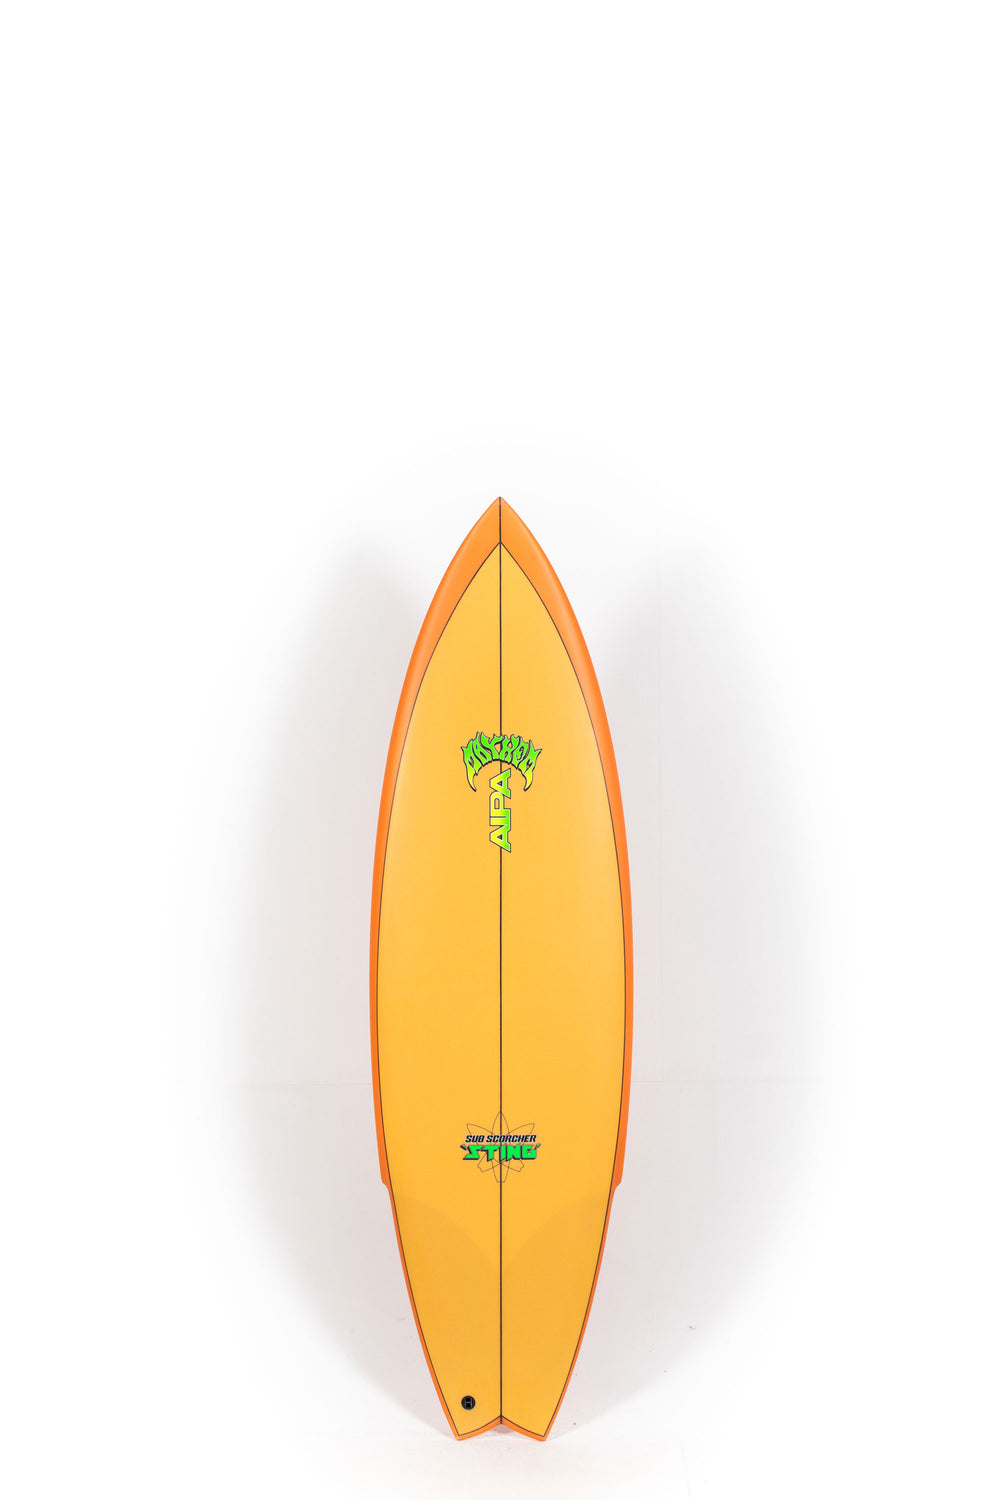 Pukas Surf Shop - Lost Surfboard - SUB SCORCHER STING by Mayhem x Brink - 5’9” x 19,75